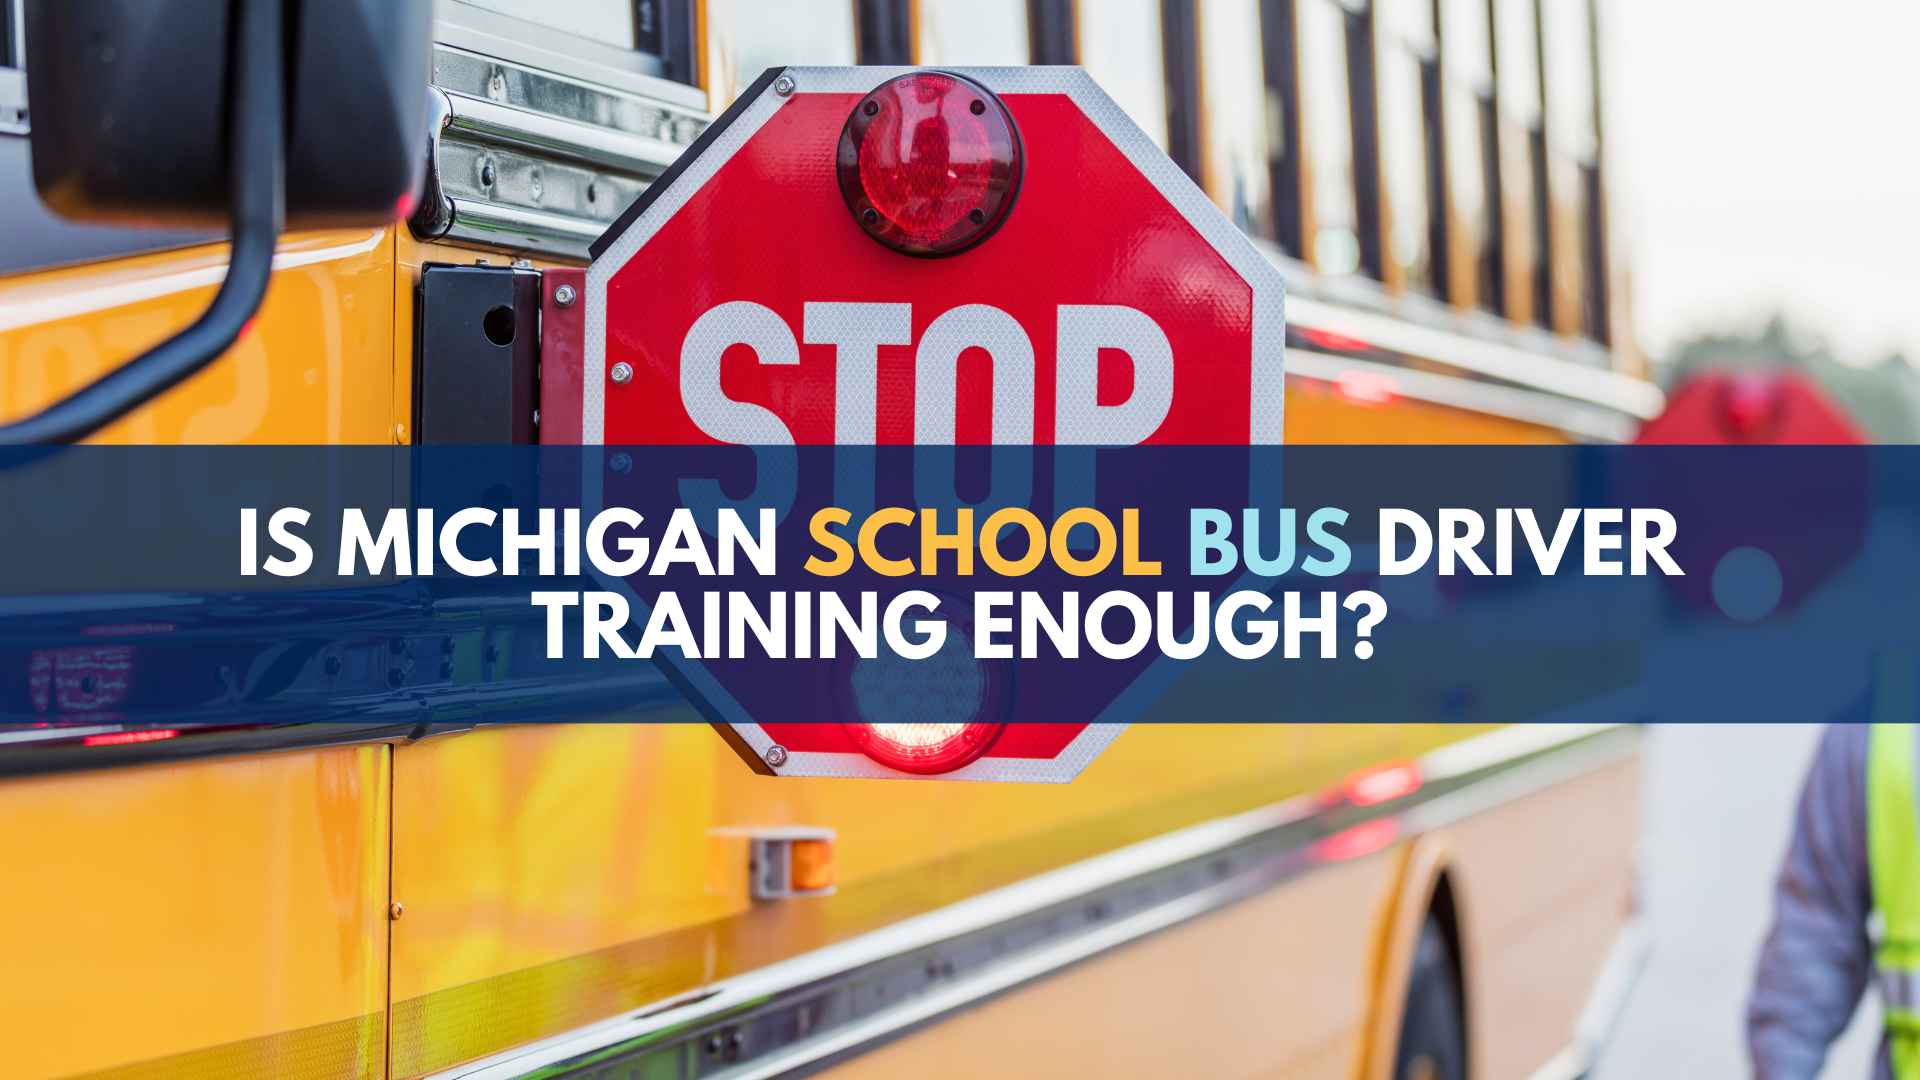 Michigan school bus driver training: Is it enough?